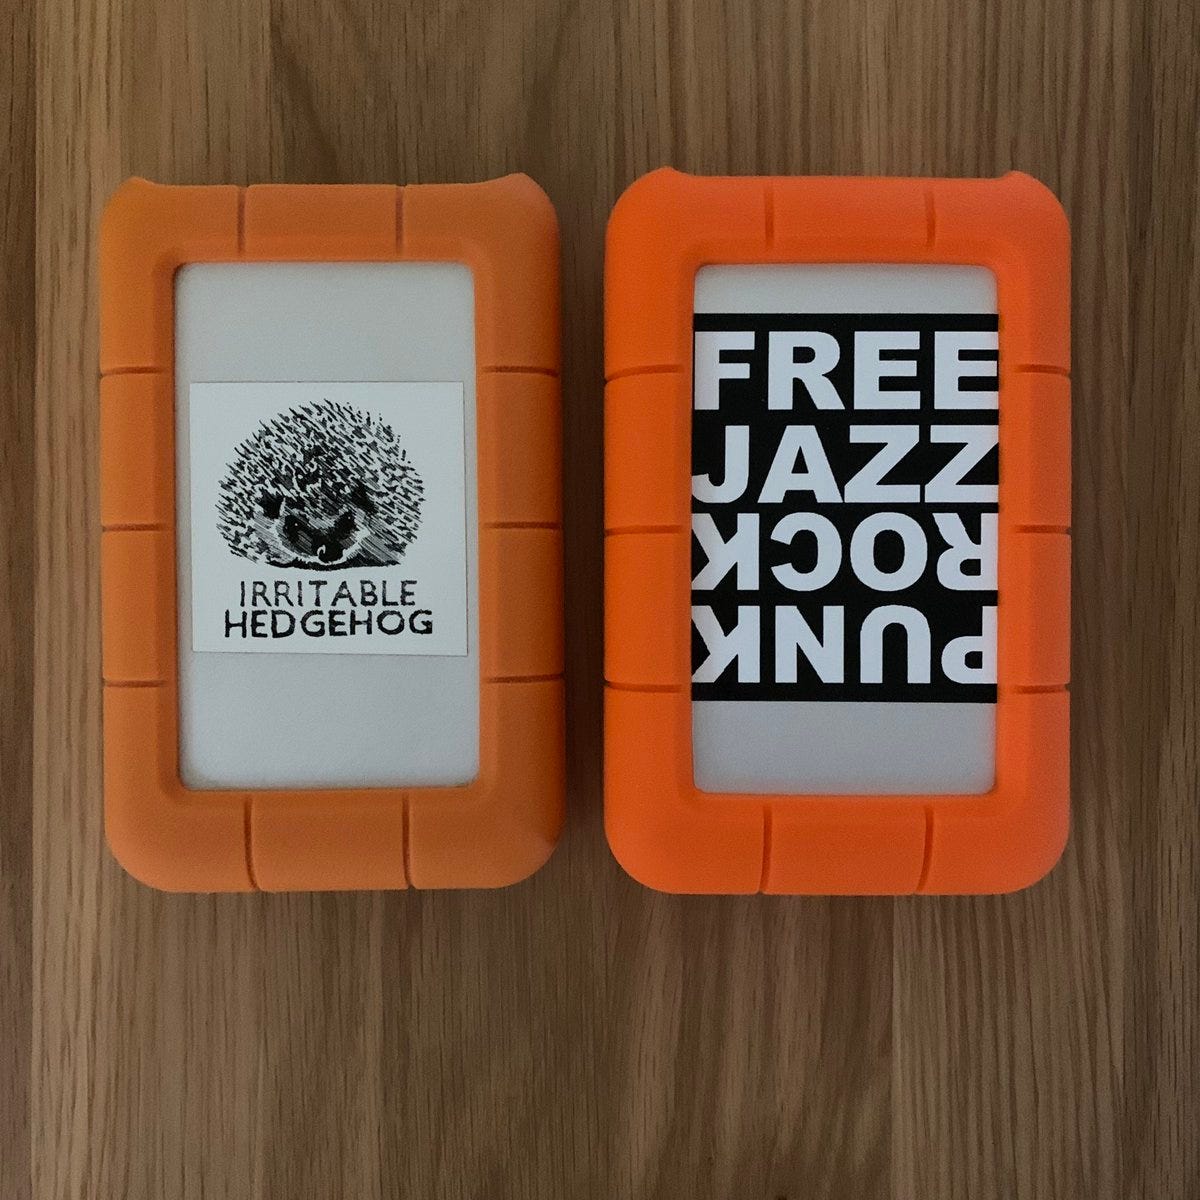 Two orange hard drives